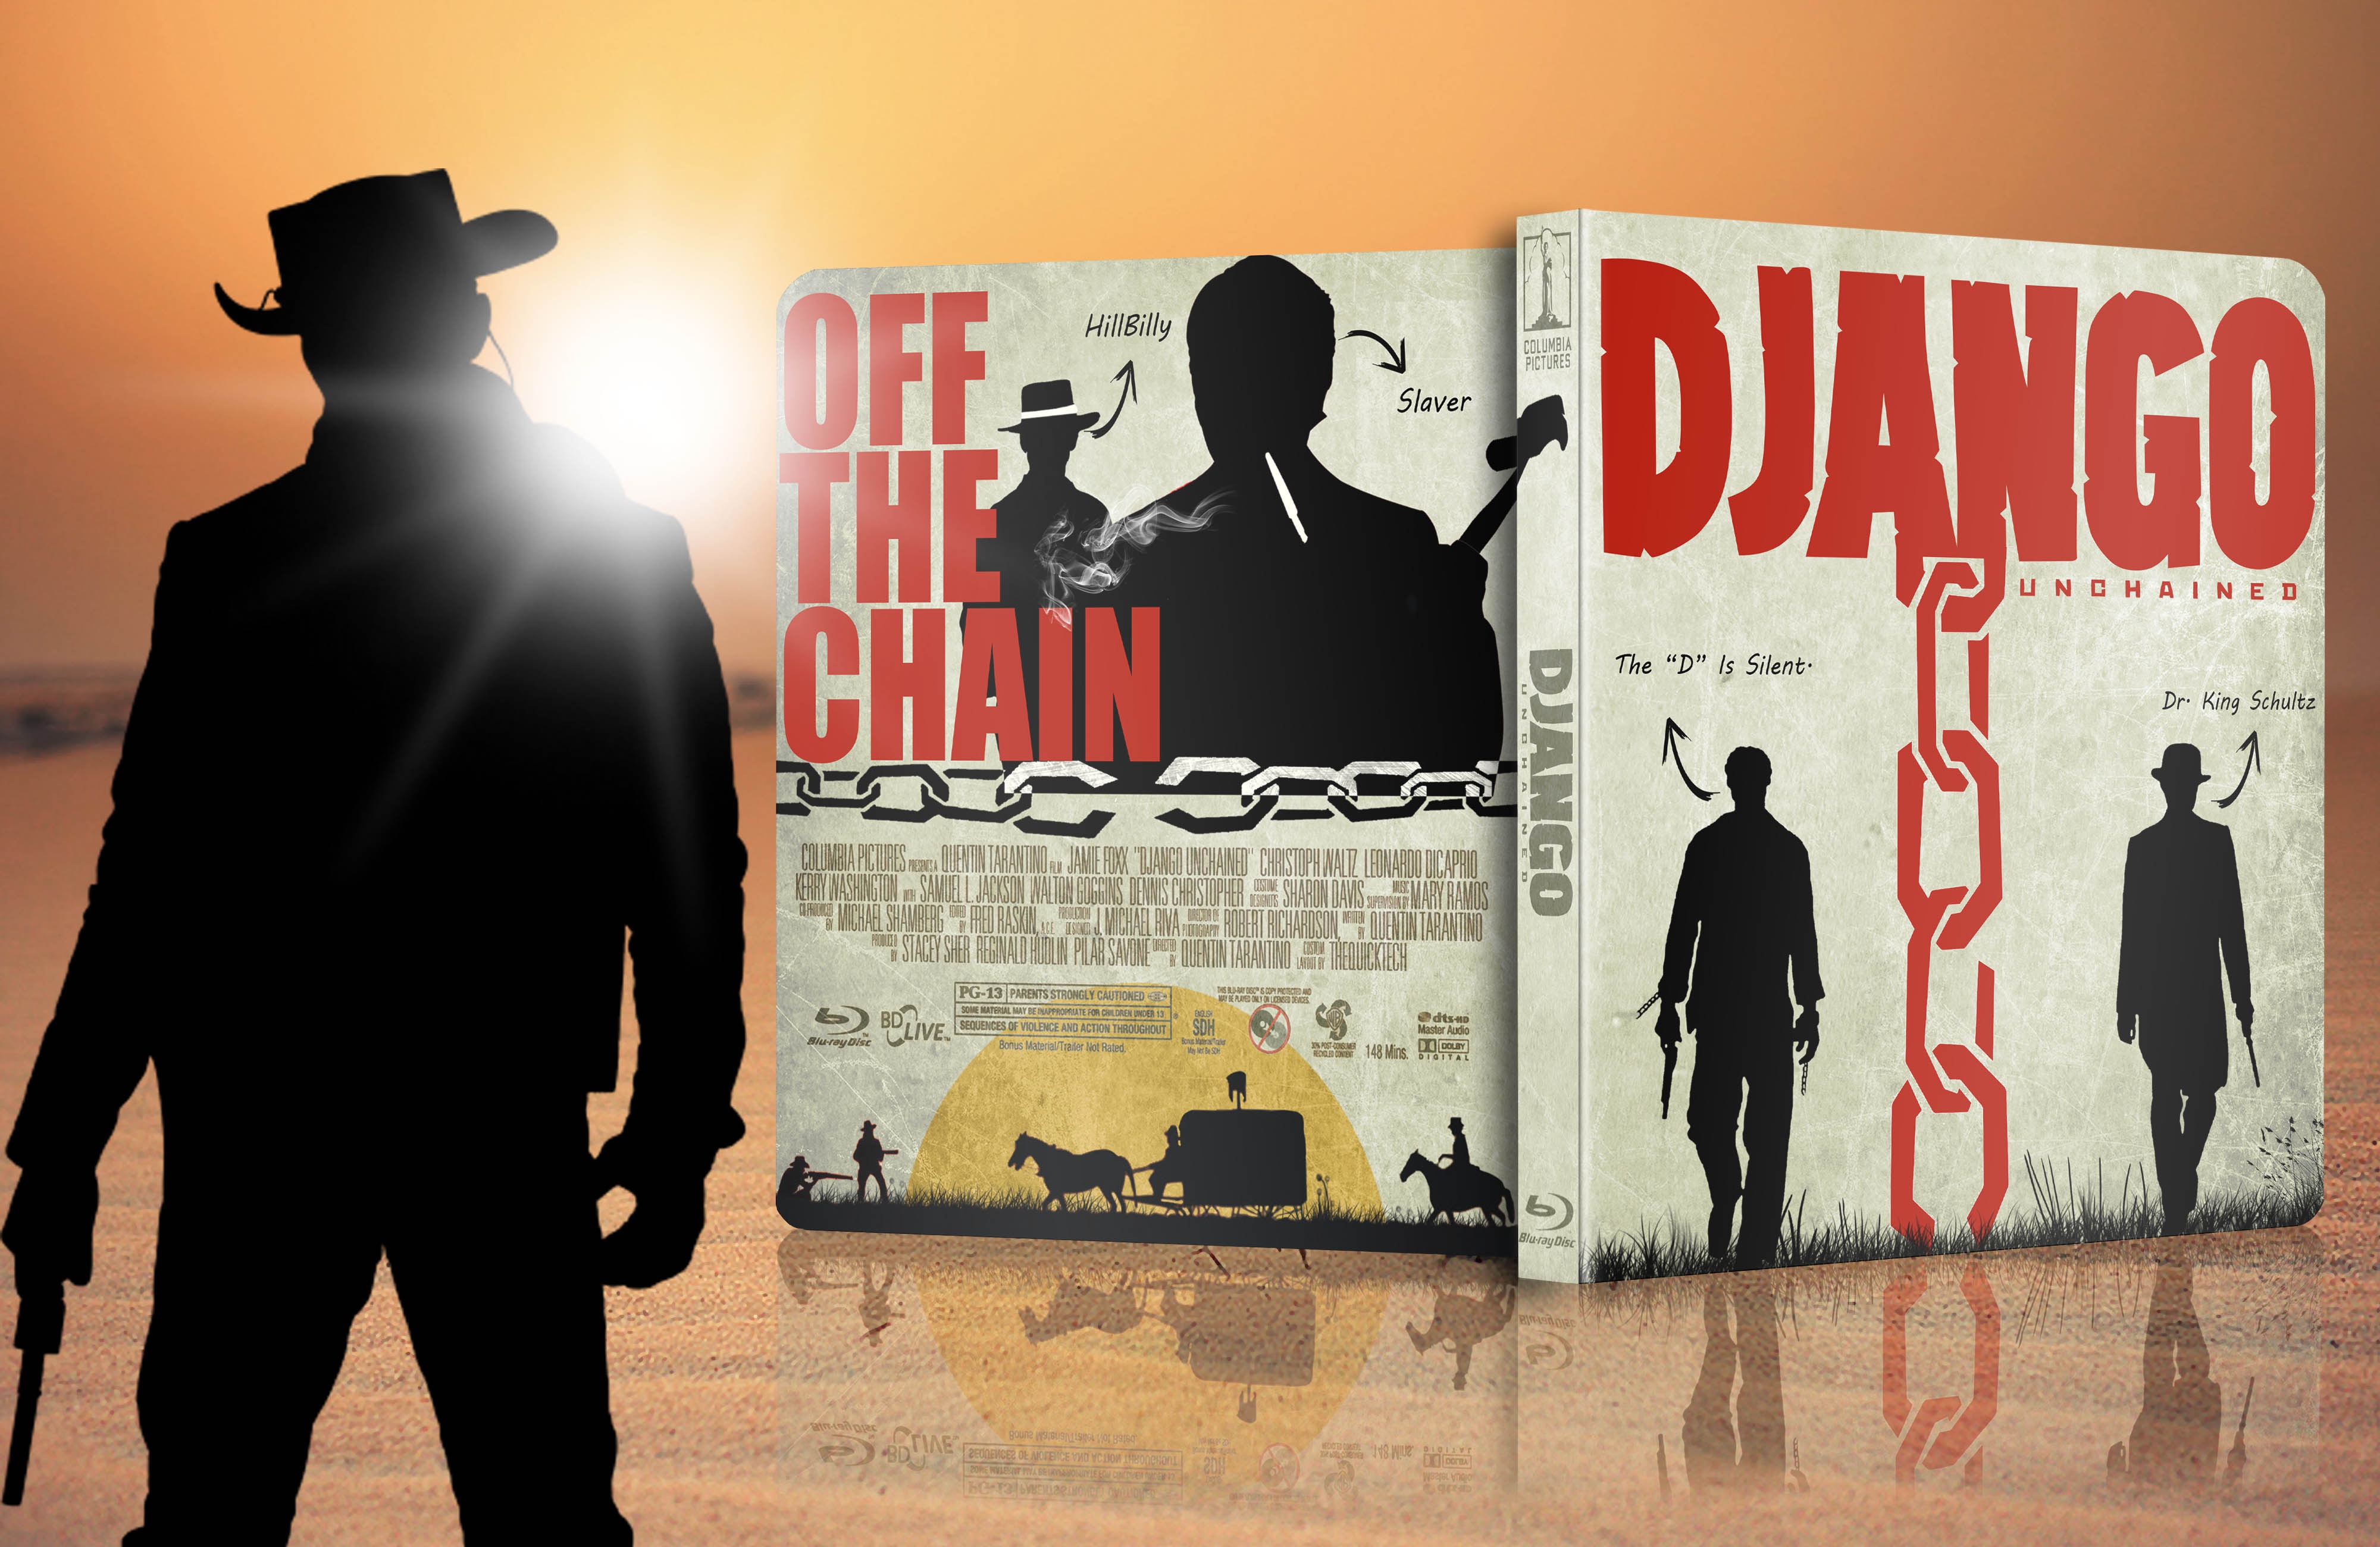 Django Unchained box cover